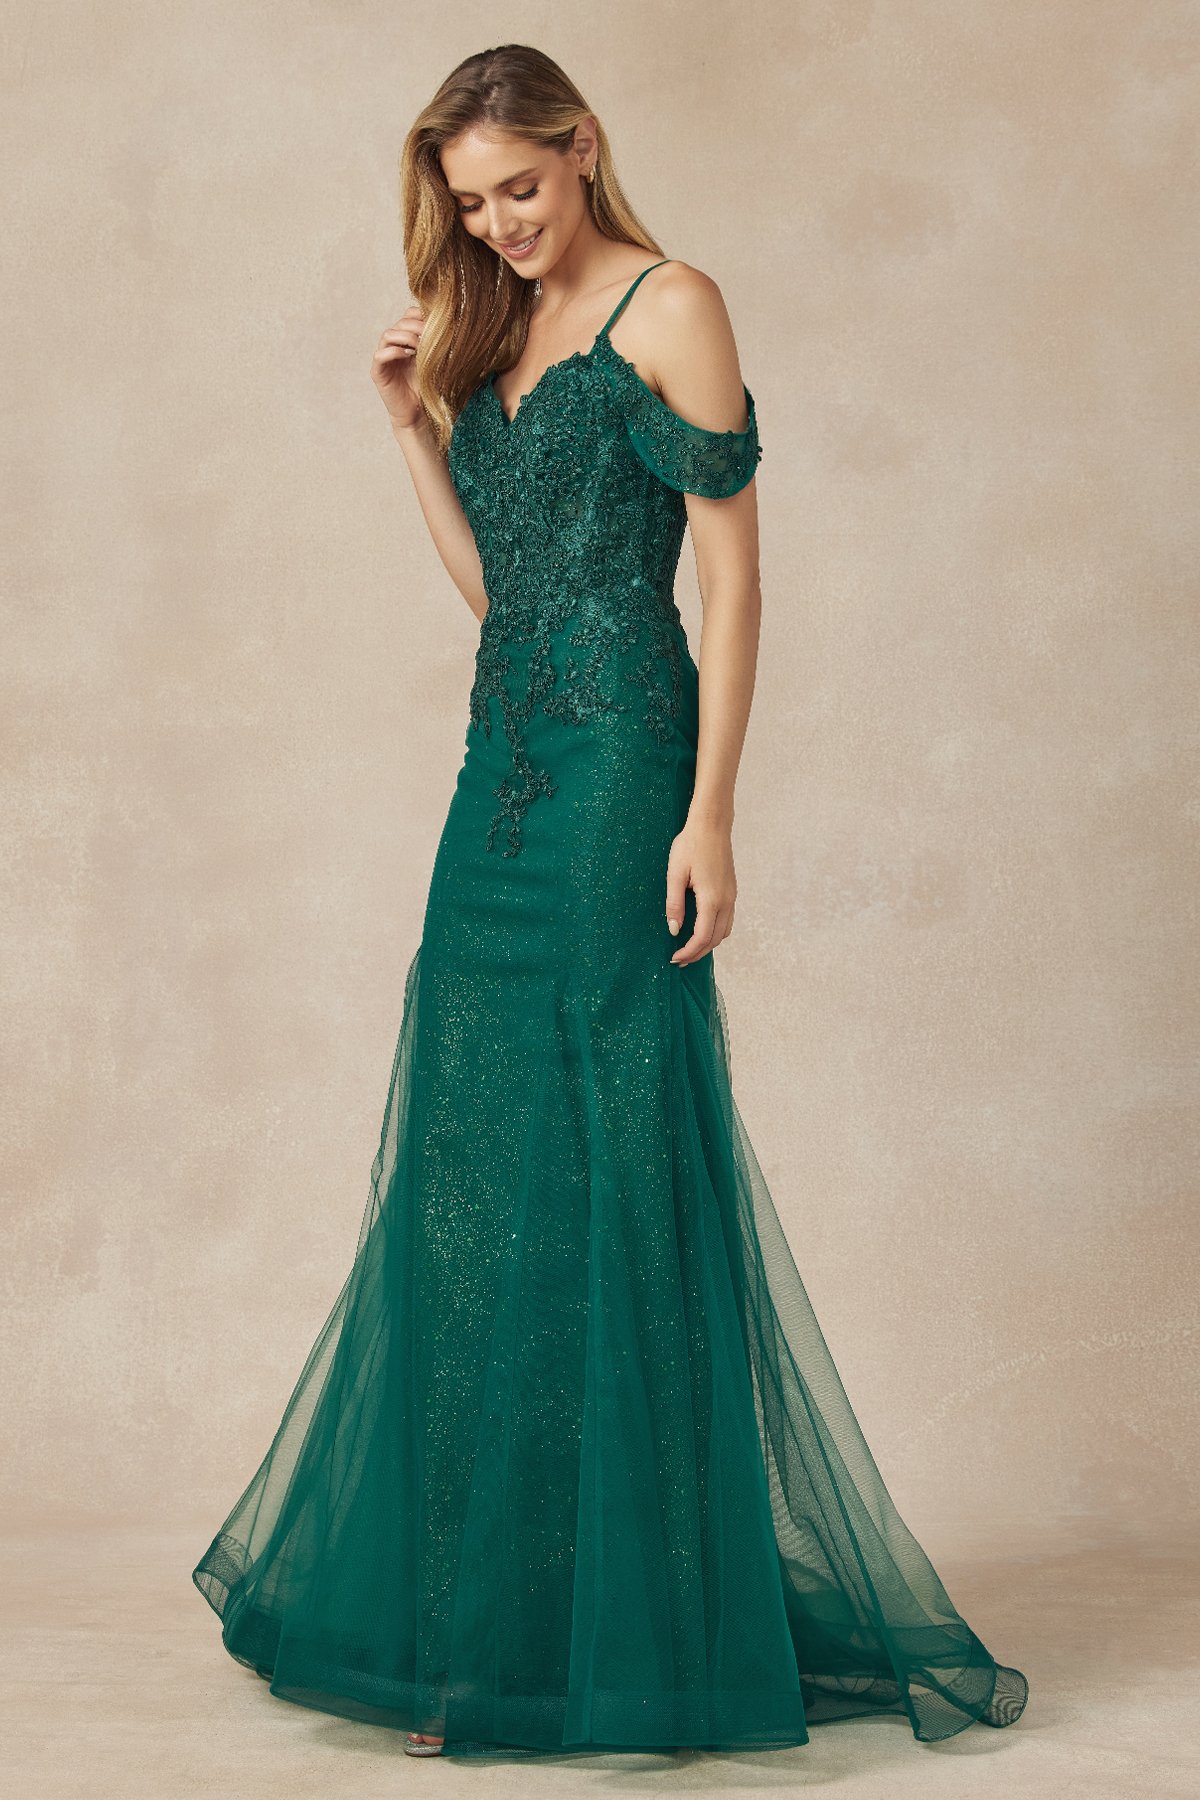 Velma | Square Neck Emerald Green Sequin Mermaid Prom Dress | KissProm